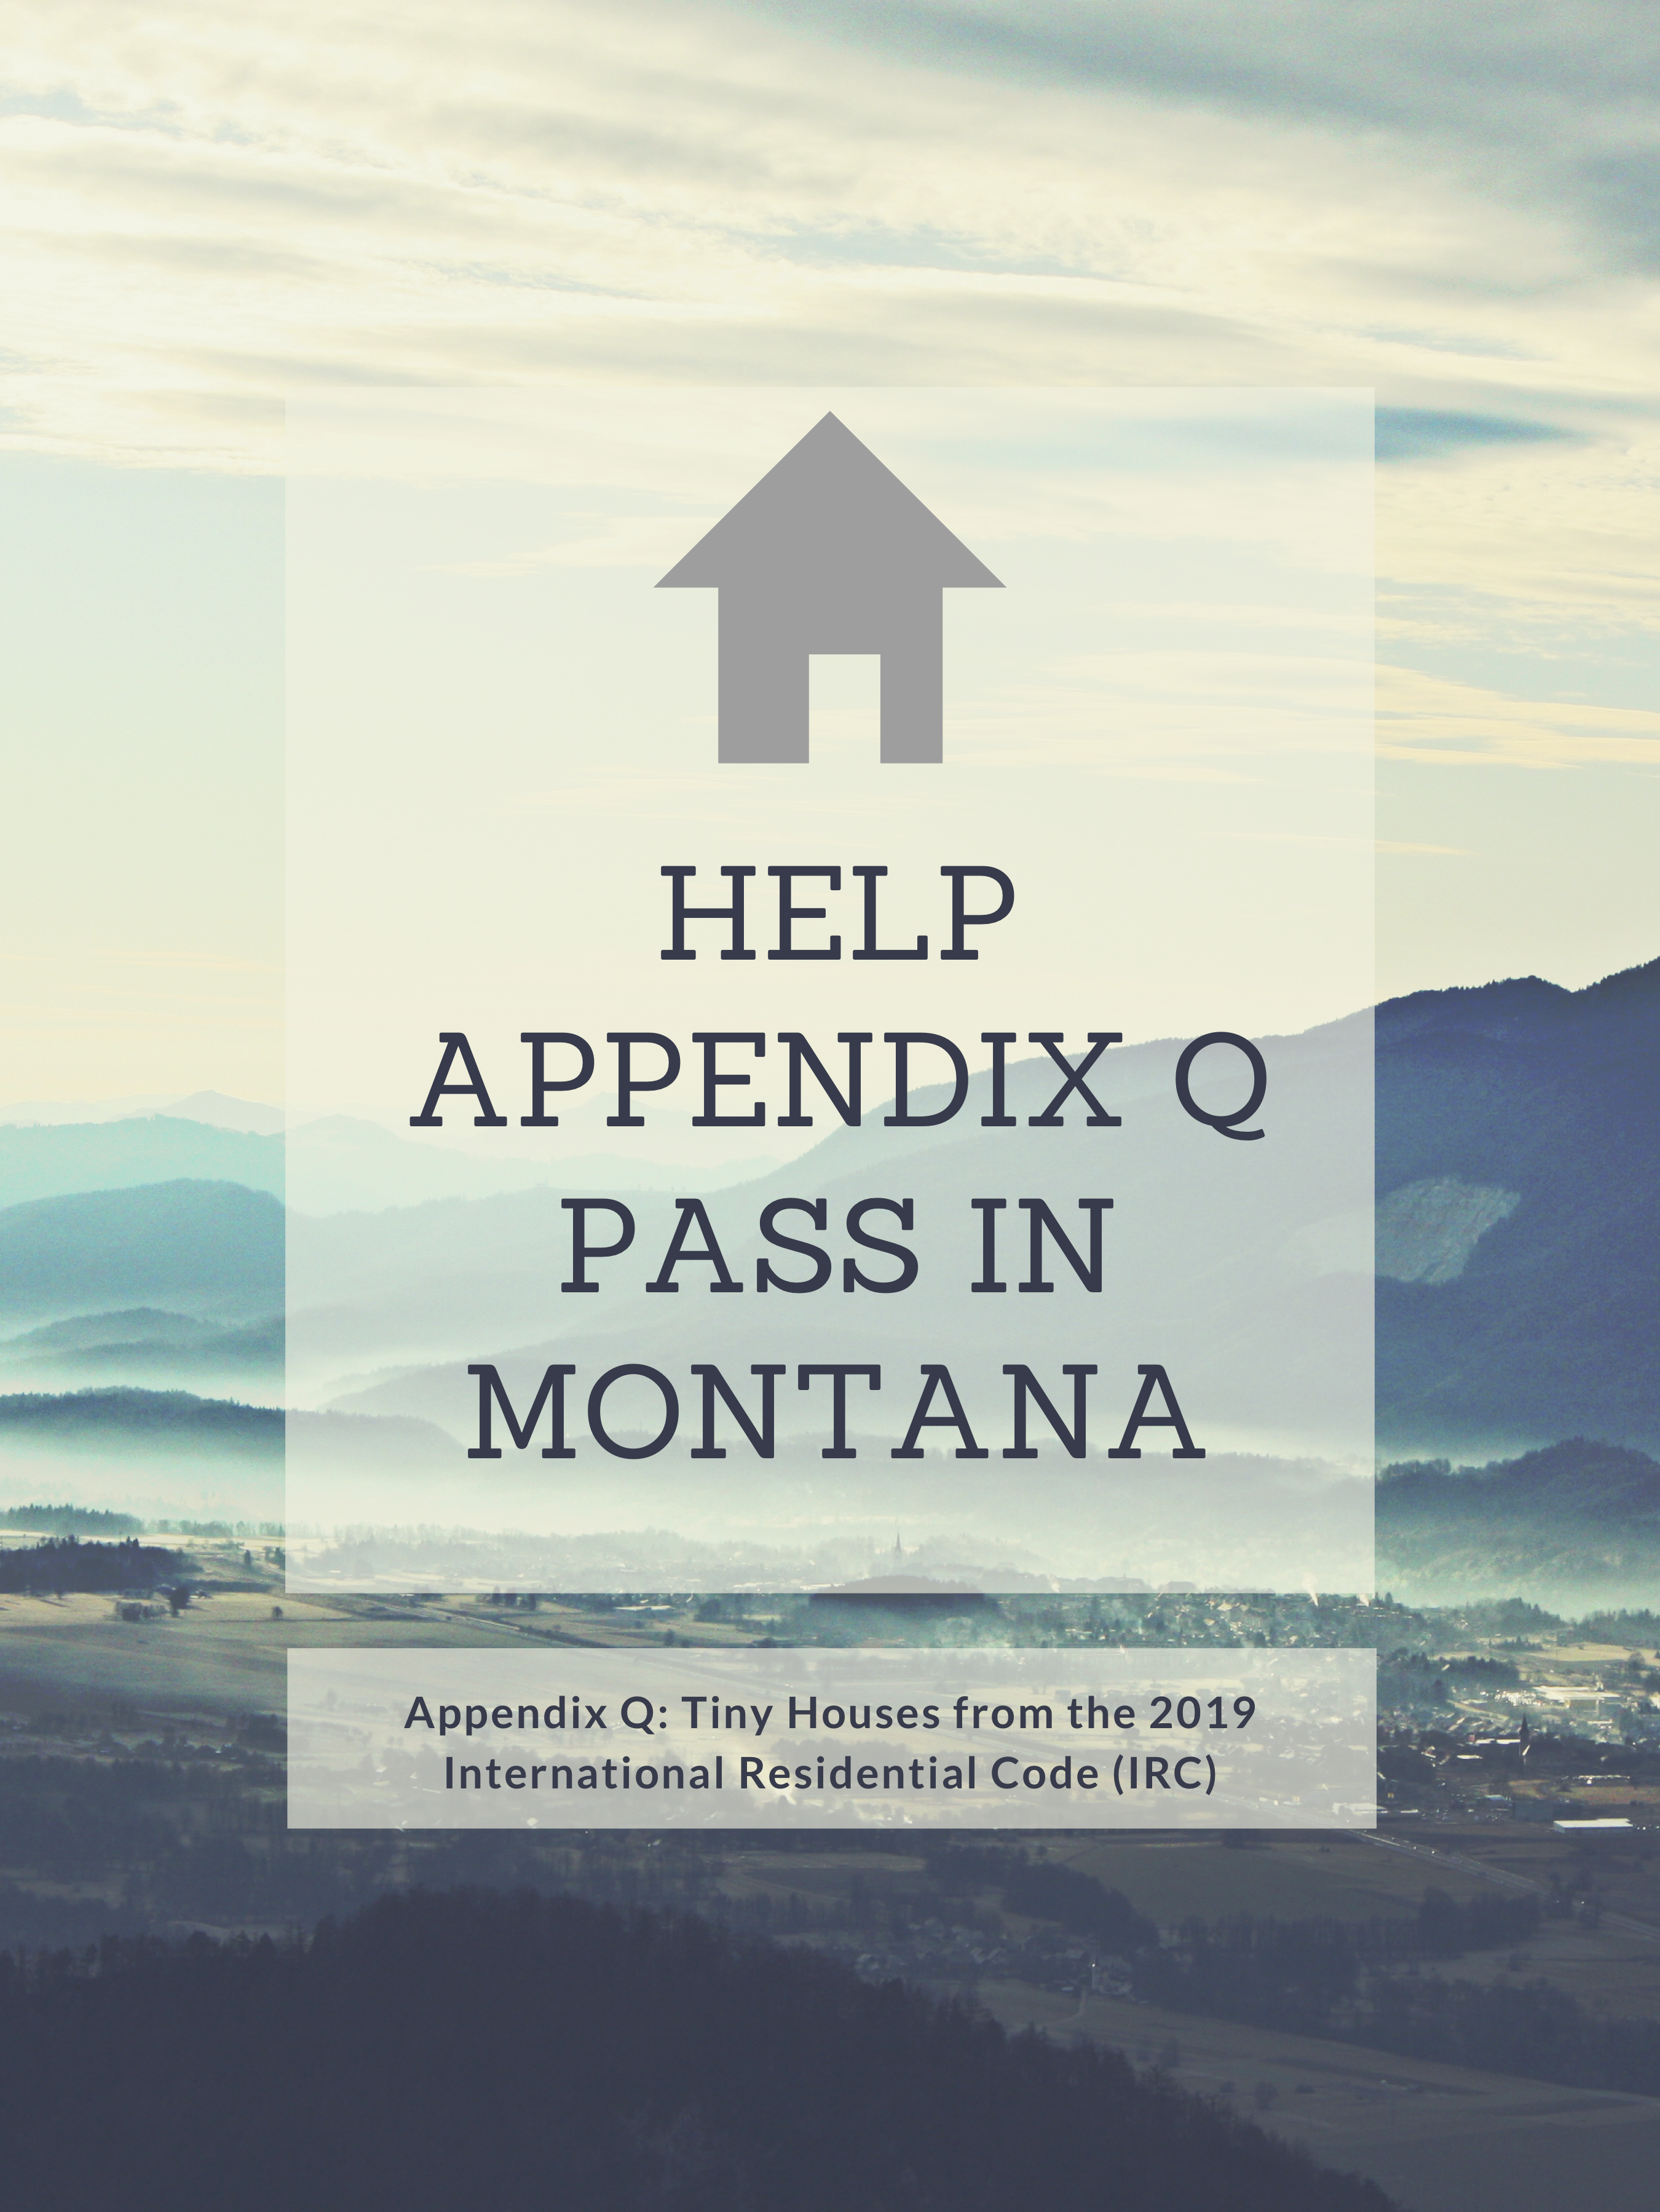 Tiny House Activism: Help Get Appendix Q Passed In Montana